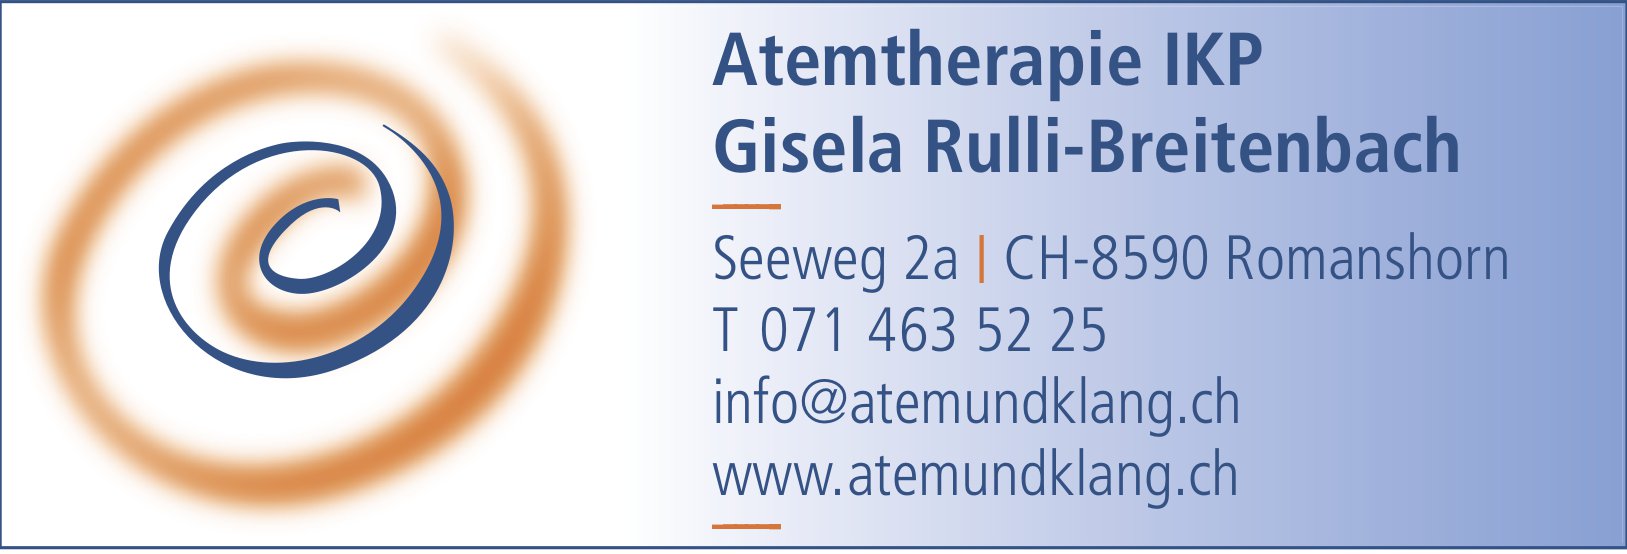 Atemtherapie Ikp Gisela Rulli-Breitenbach, Romanshorn - Atemtherapie